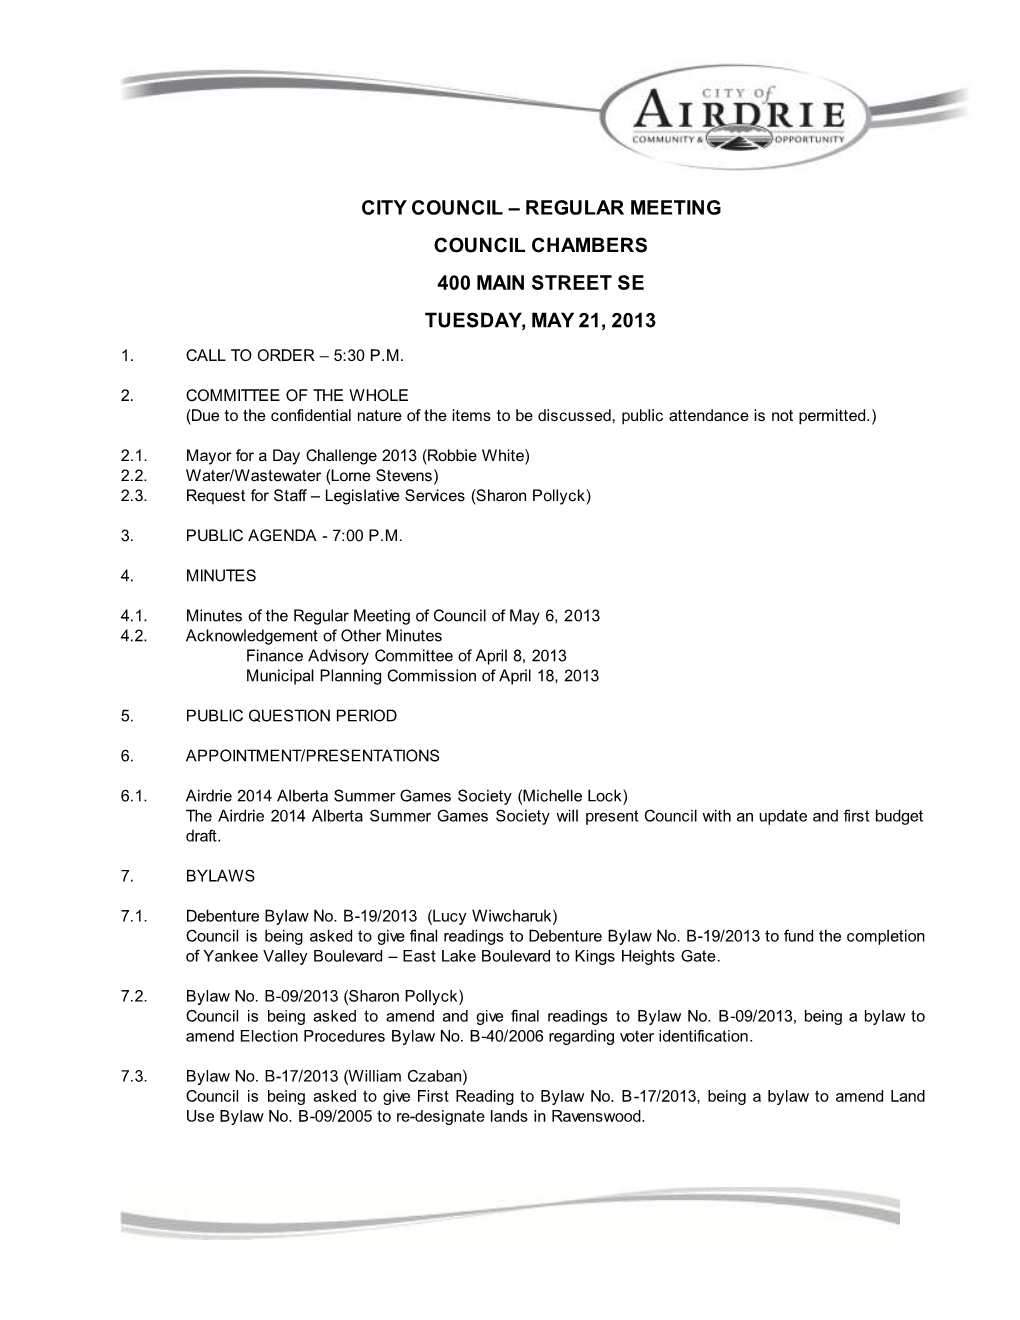 City Council – Regular Meeting Council Chambers 400 Main Street Se Tuesday, May 21, 2013